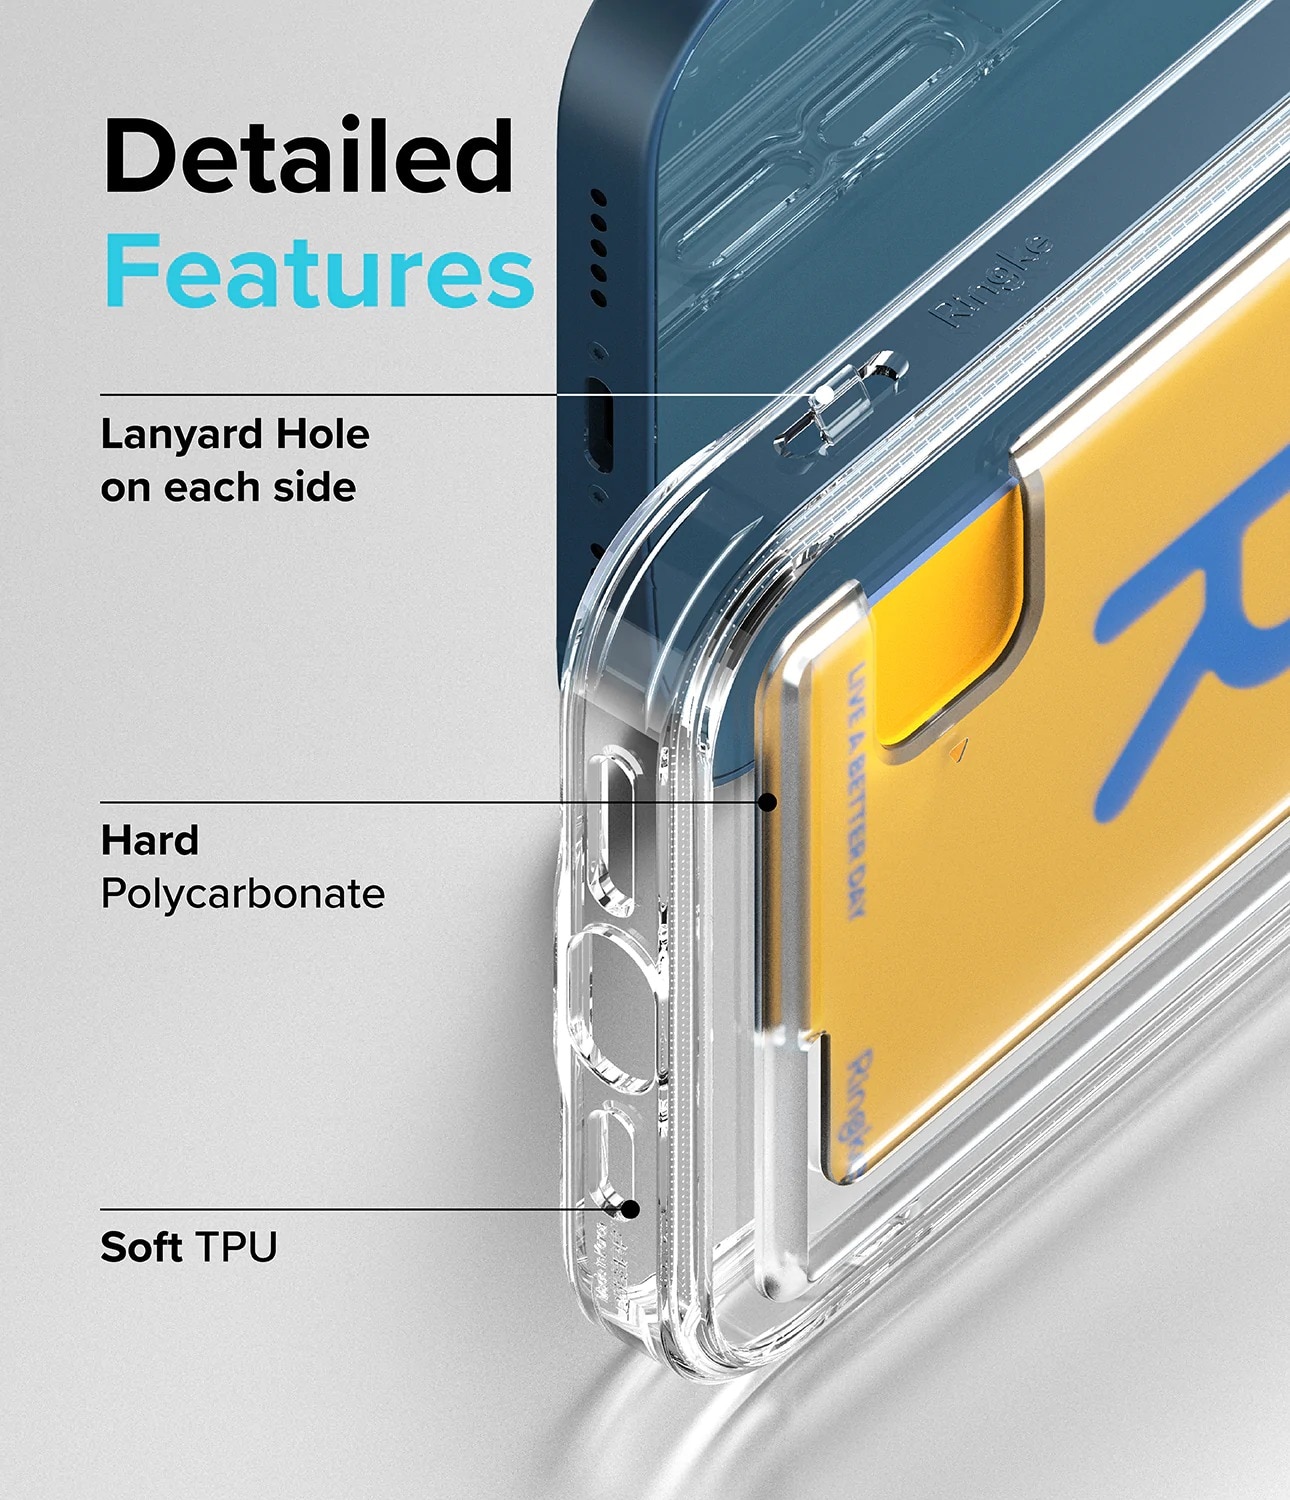 iPhone 13 Fusion Card Case Transparent